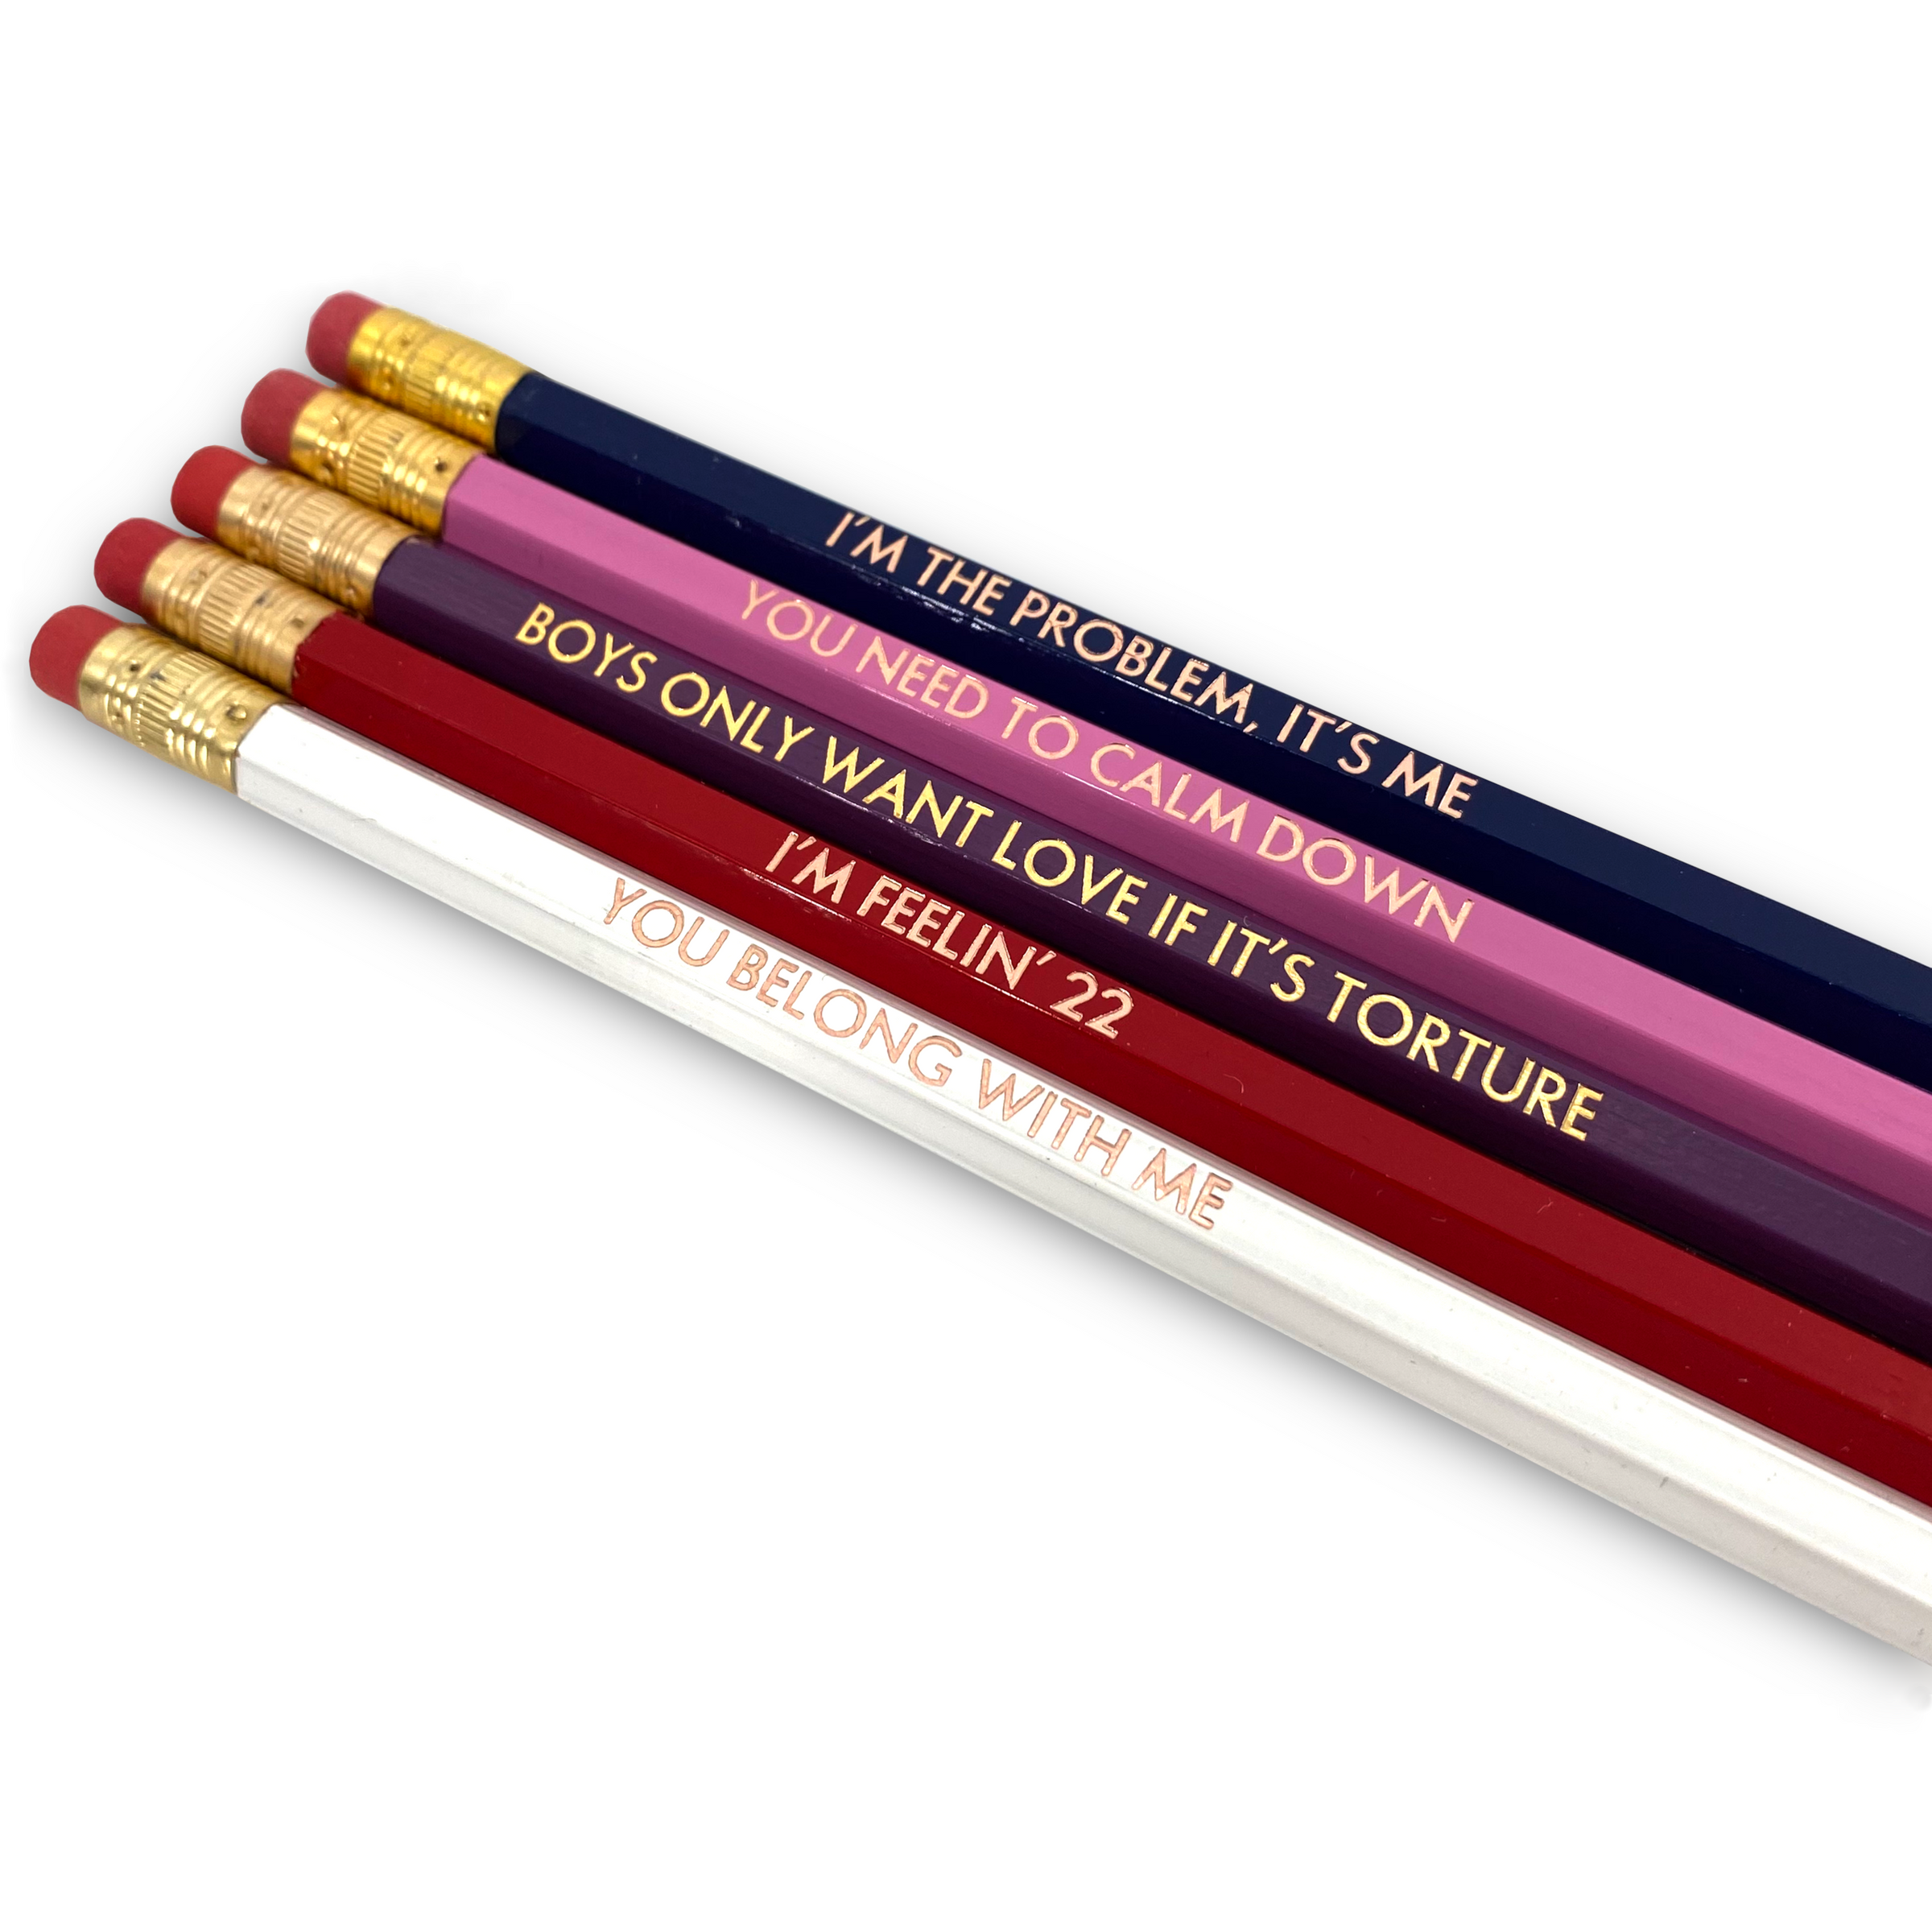  Taylor Swift Pencils